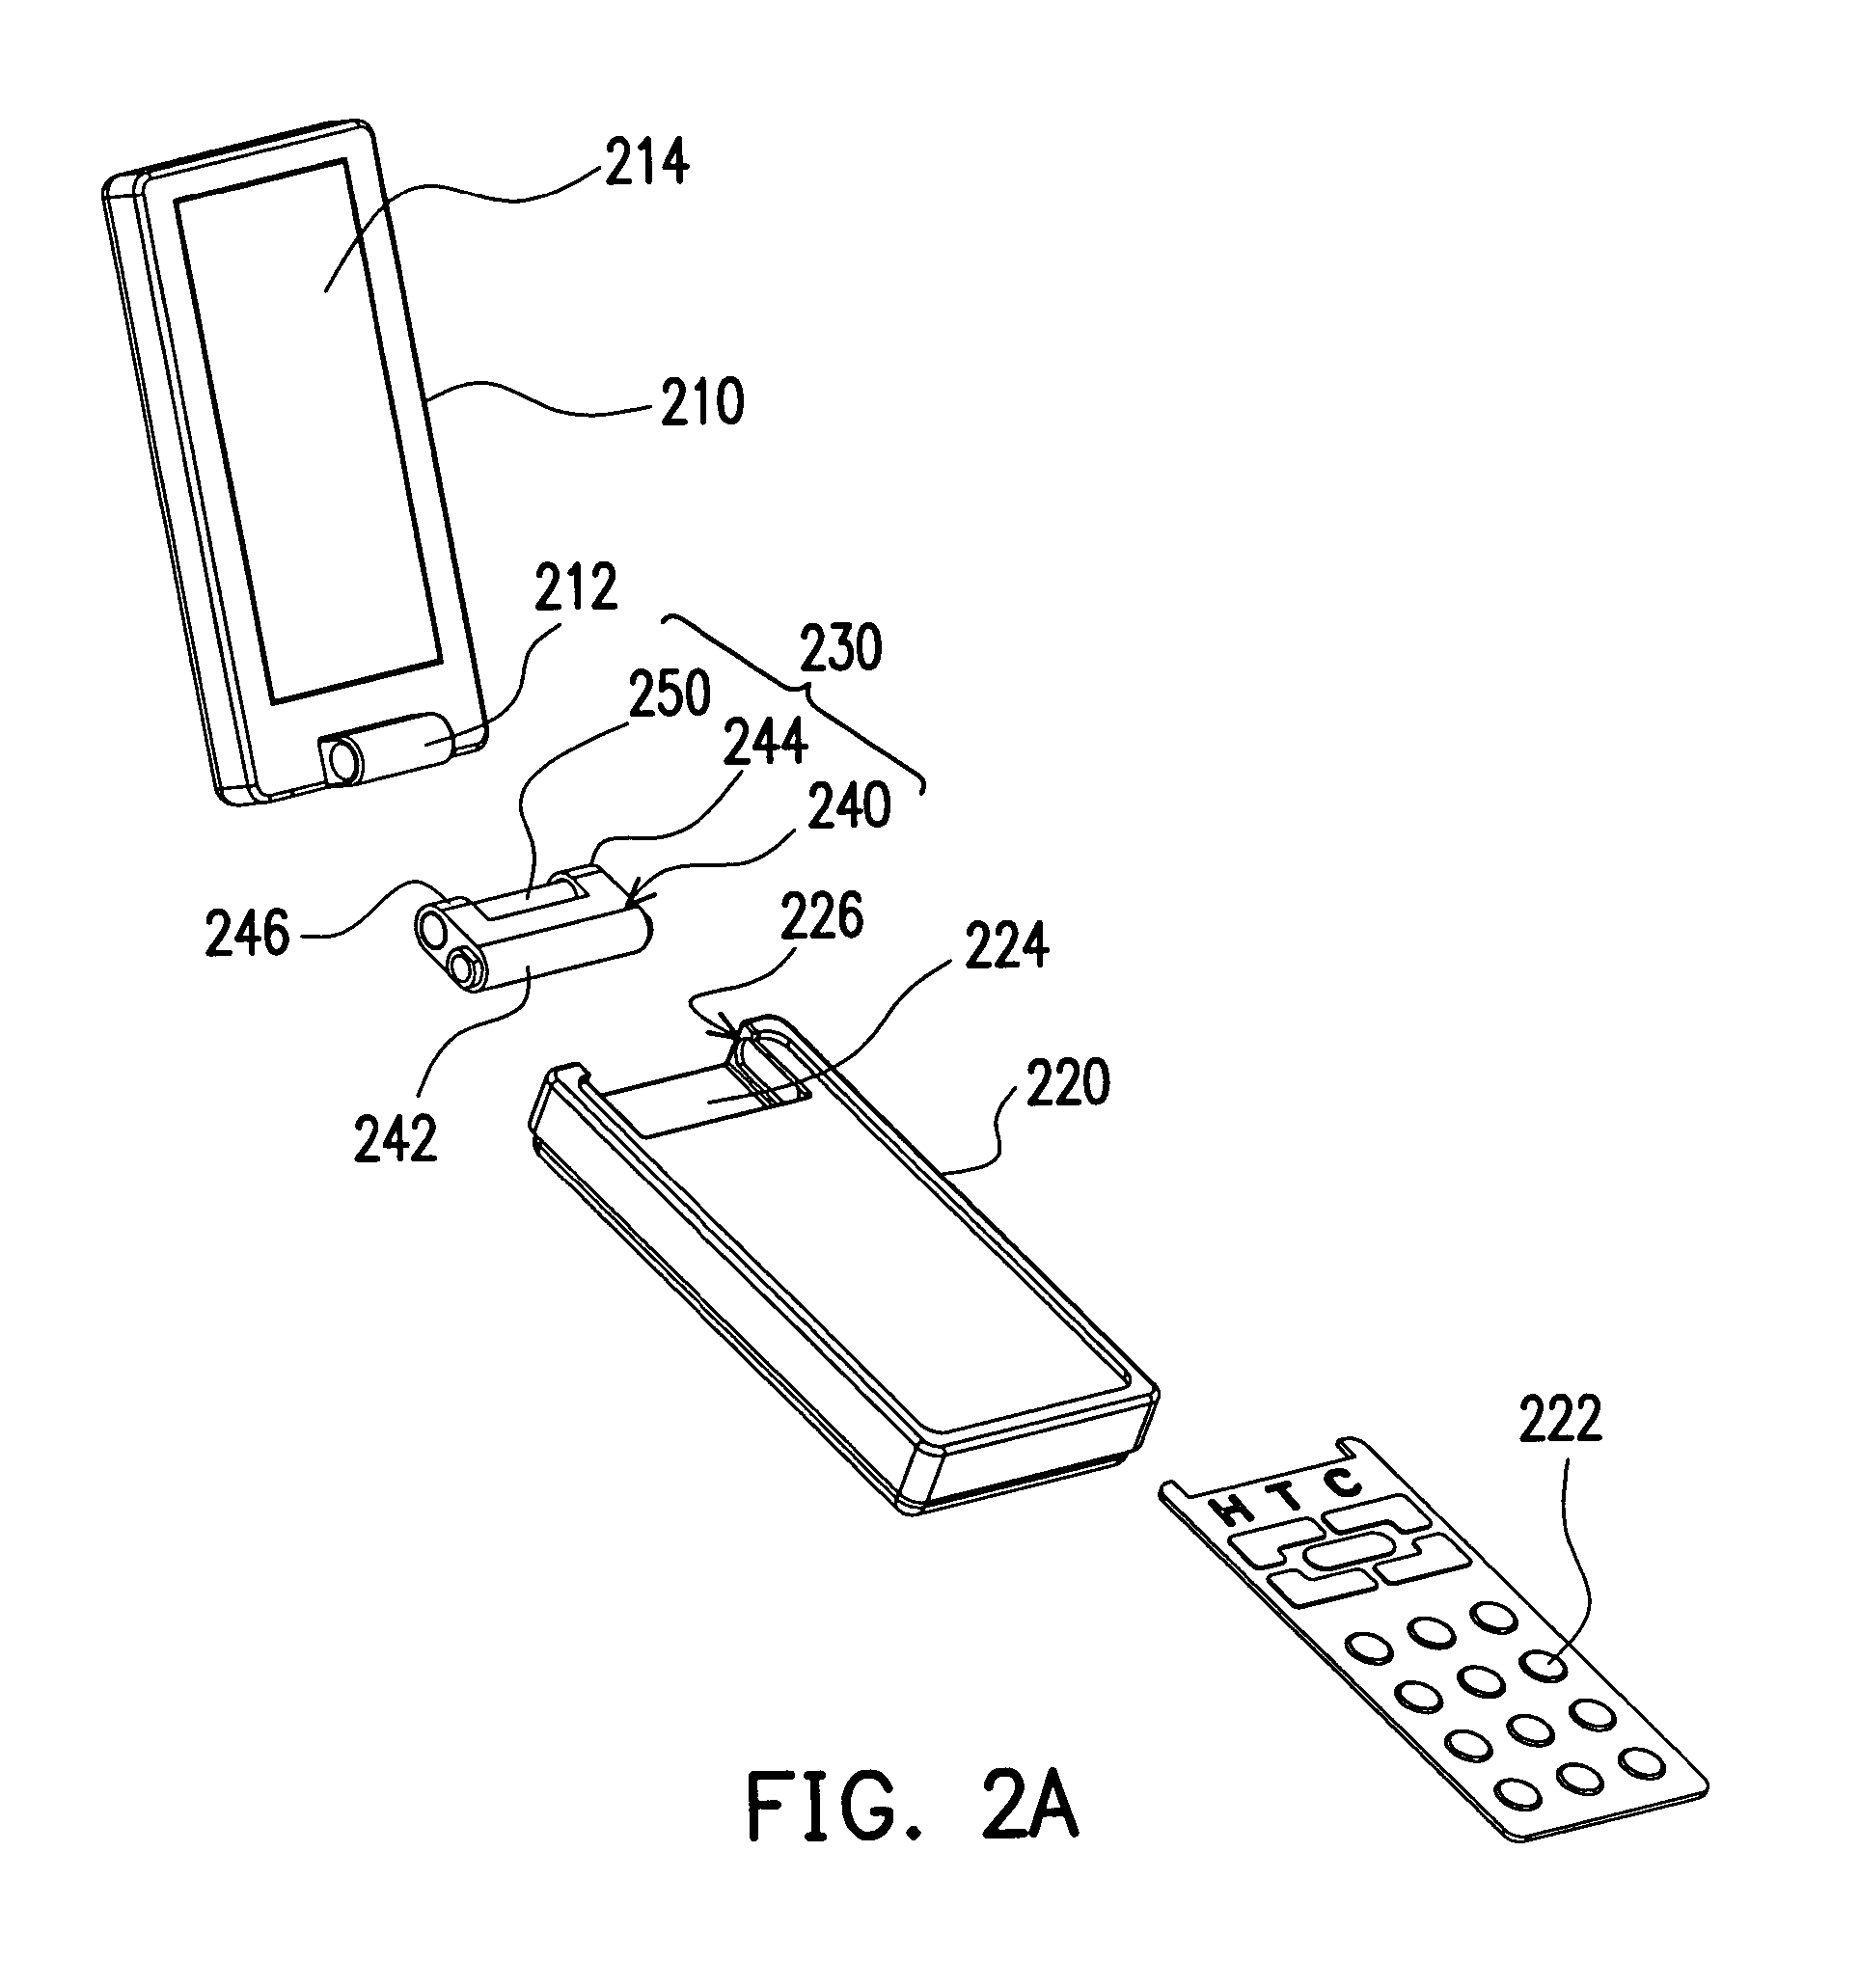 Handheld electronic device having shiftable pivot structure